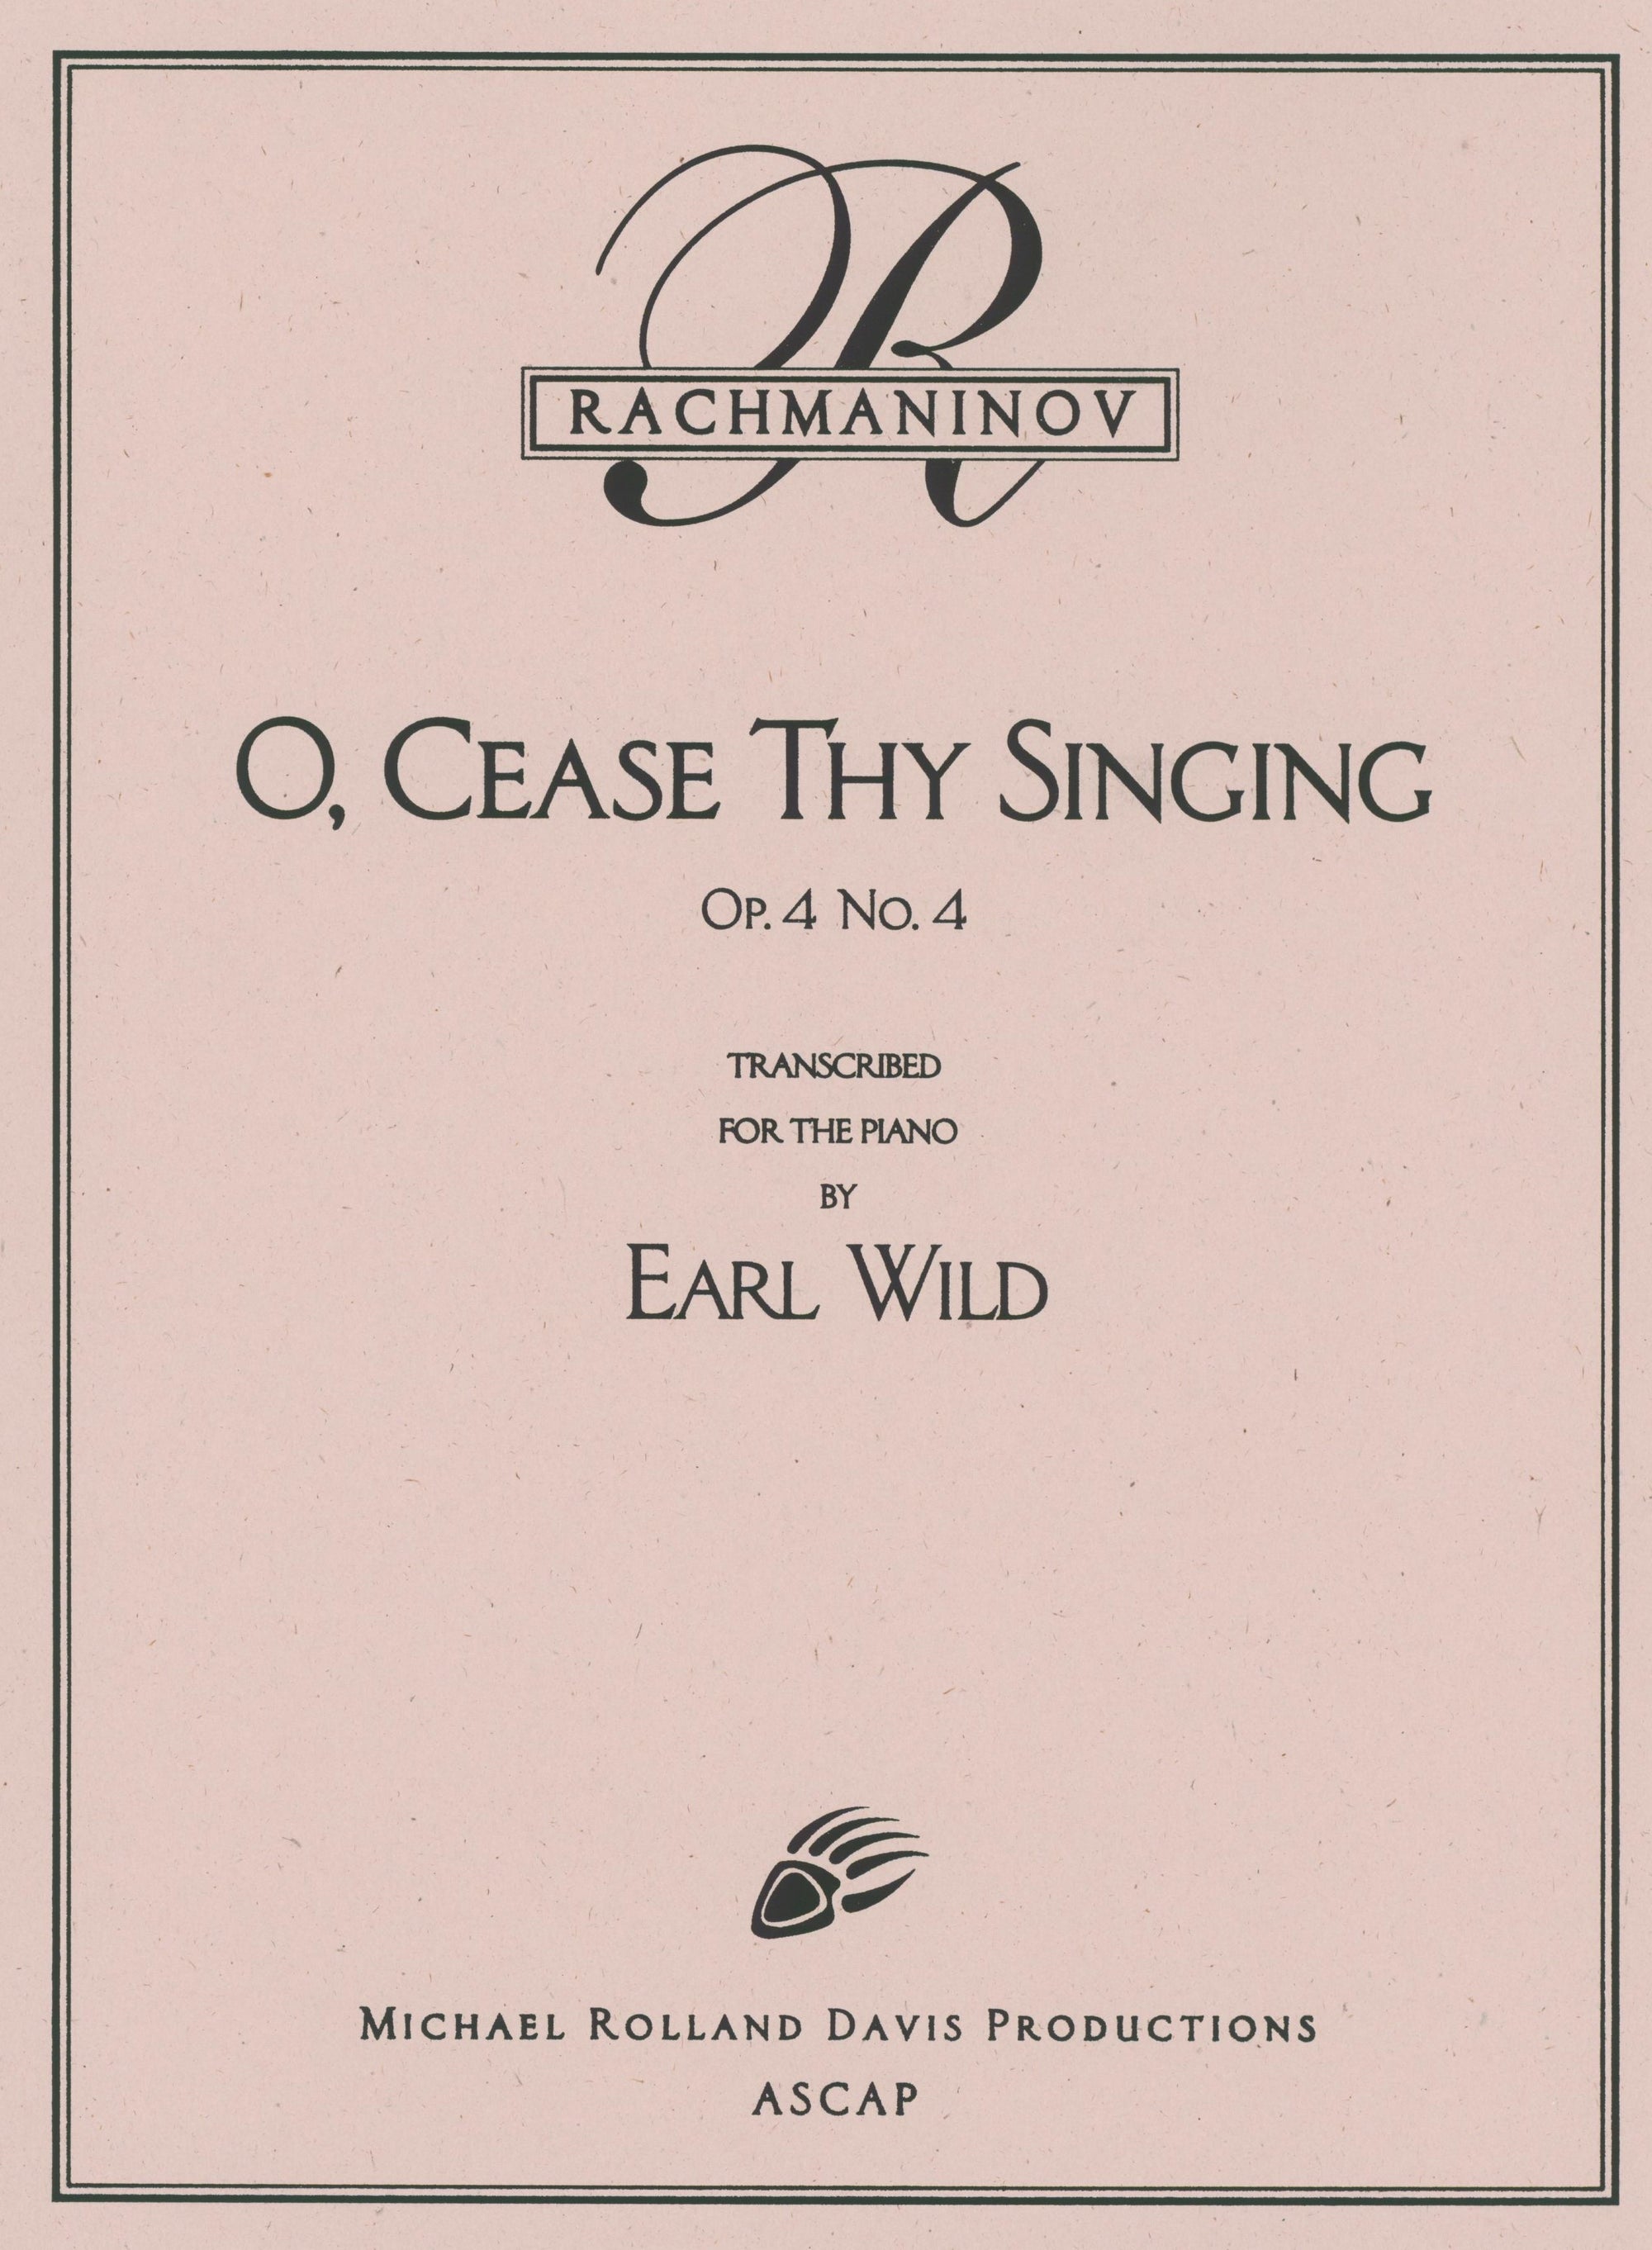 Rachmaninoff-Wild: O, Cease thy Singing, Op. 4, No. 4